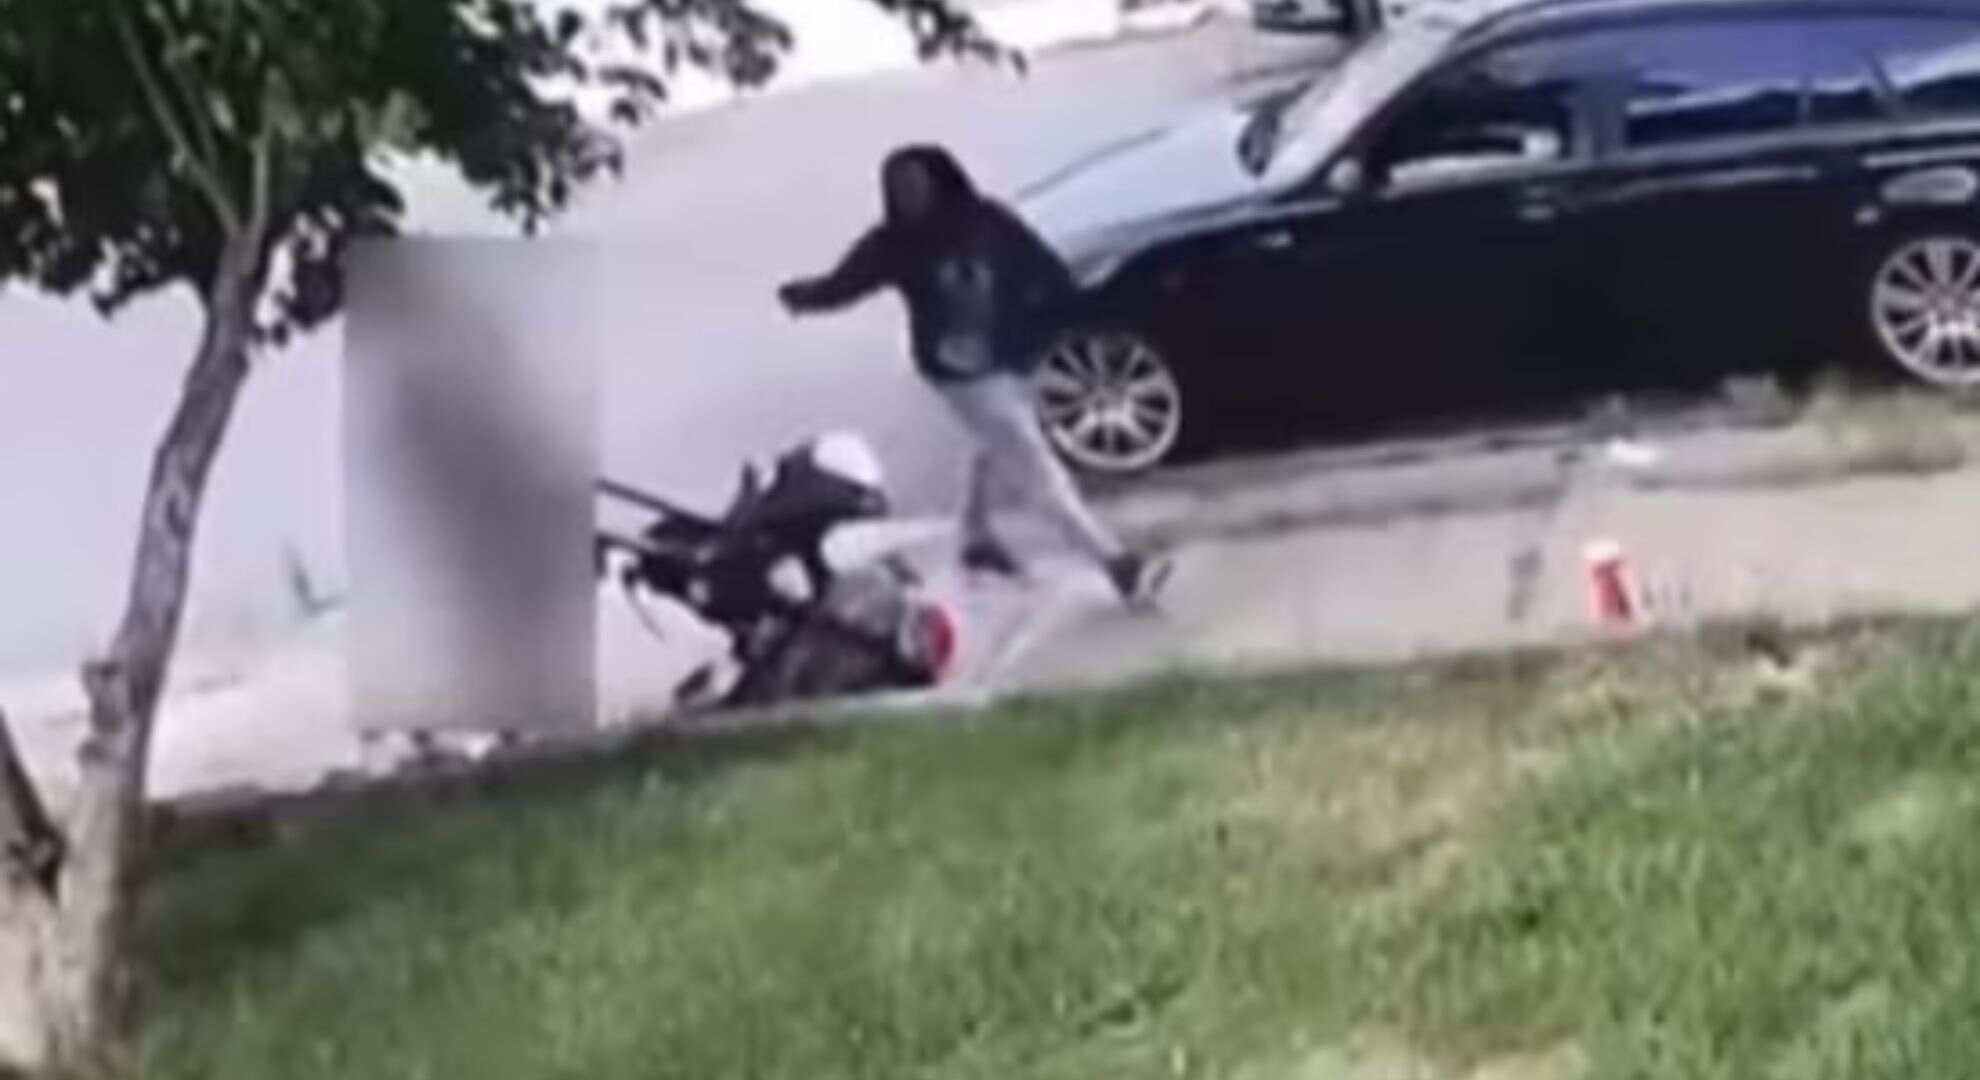 Viral Video Captures Philadelphia Woman Shooting Infant at Close Range; Suspect Arrested”